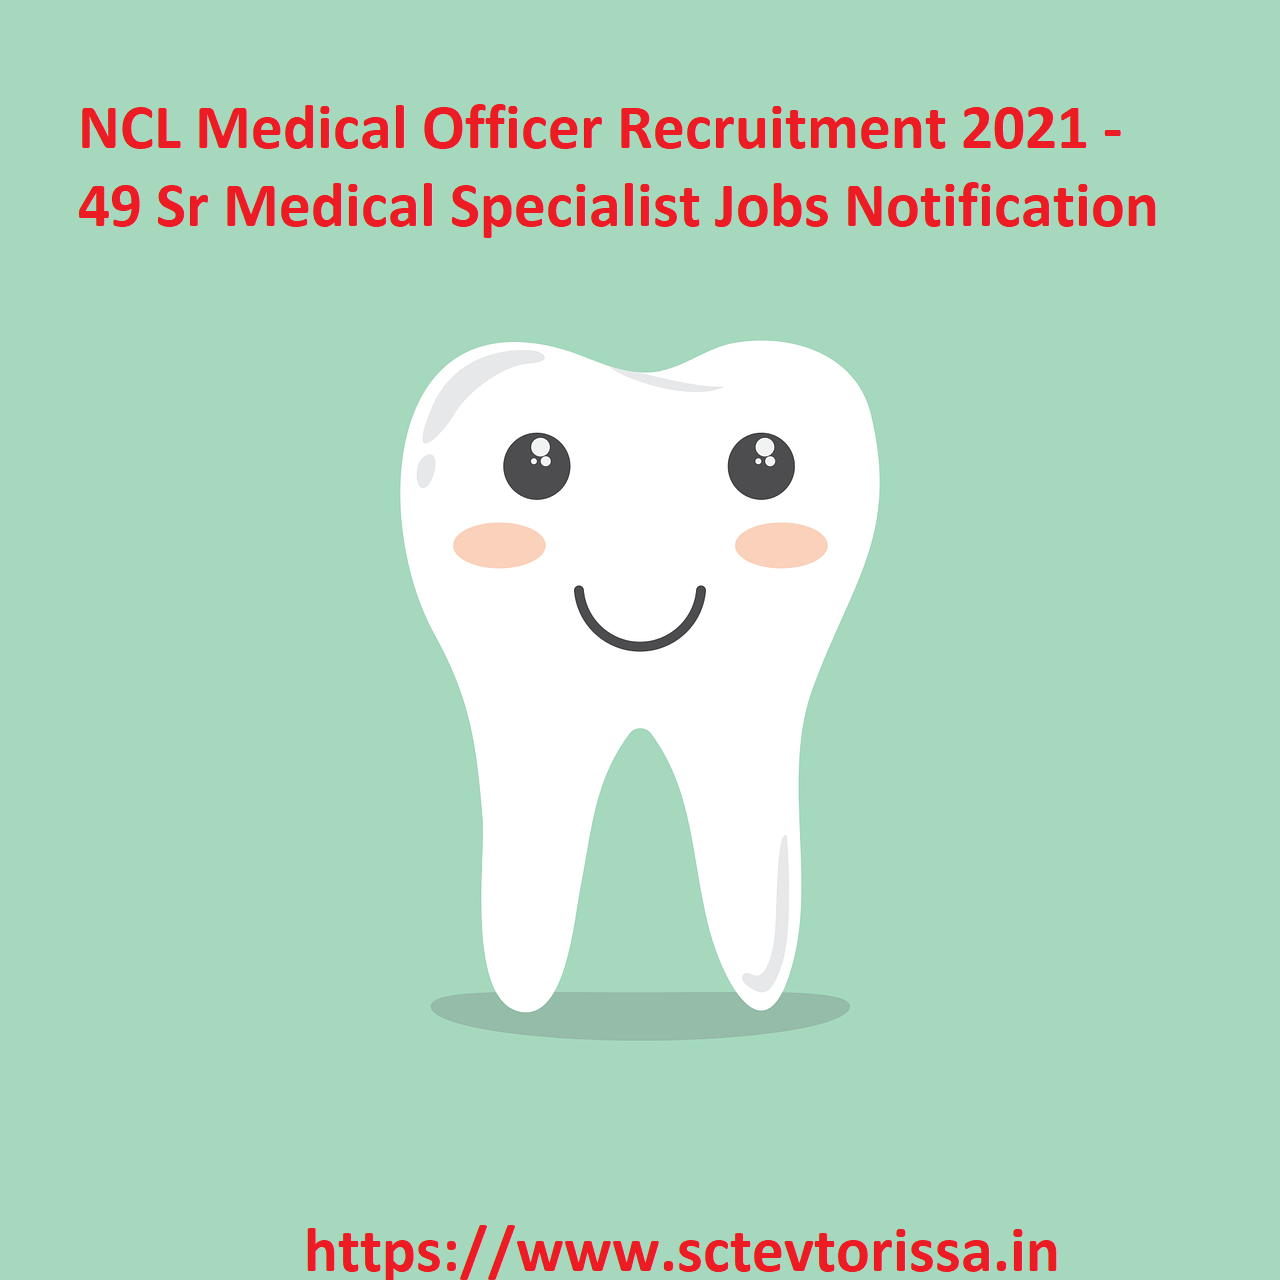 NCL Medical Officer Recruitment